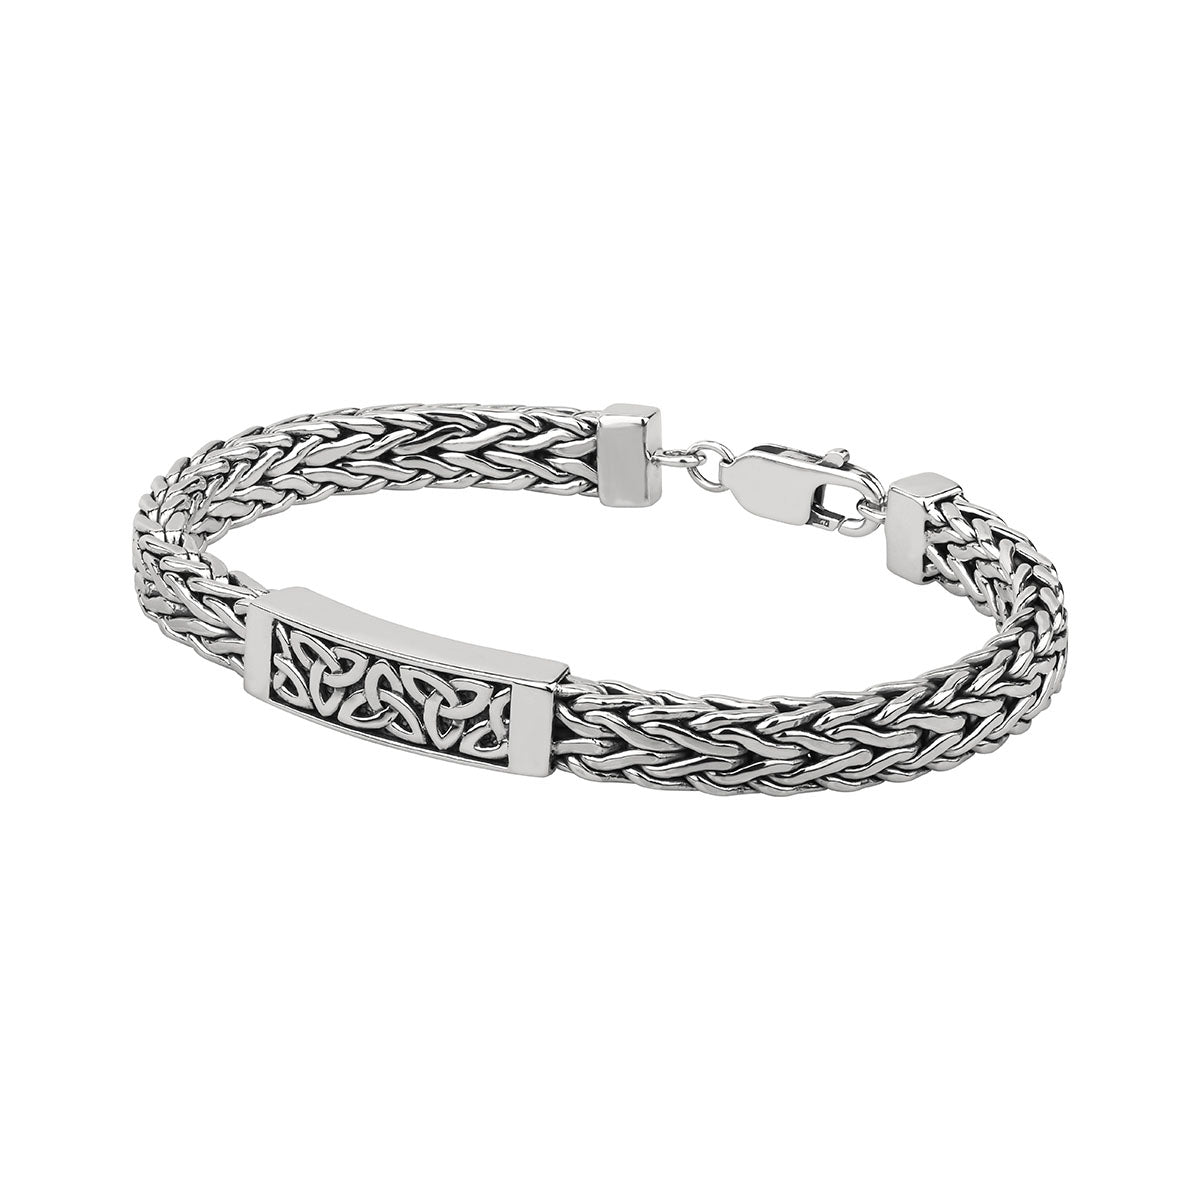 sterling silver trinity knot bracelet s50038 from Solvar